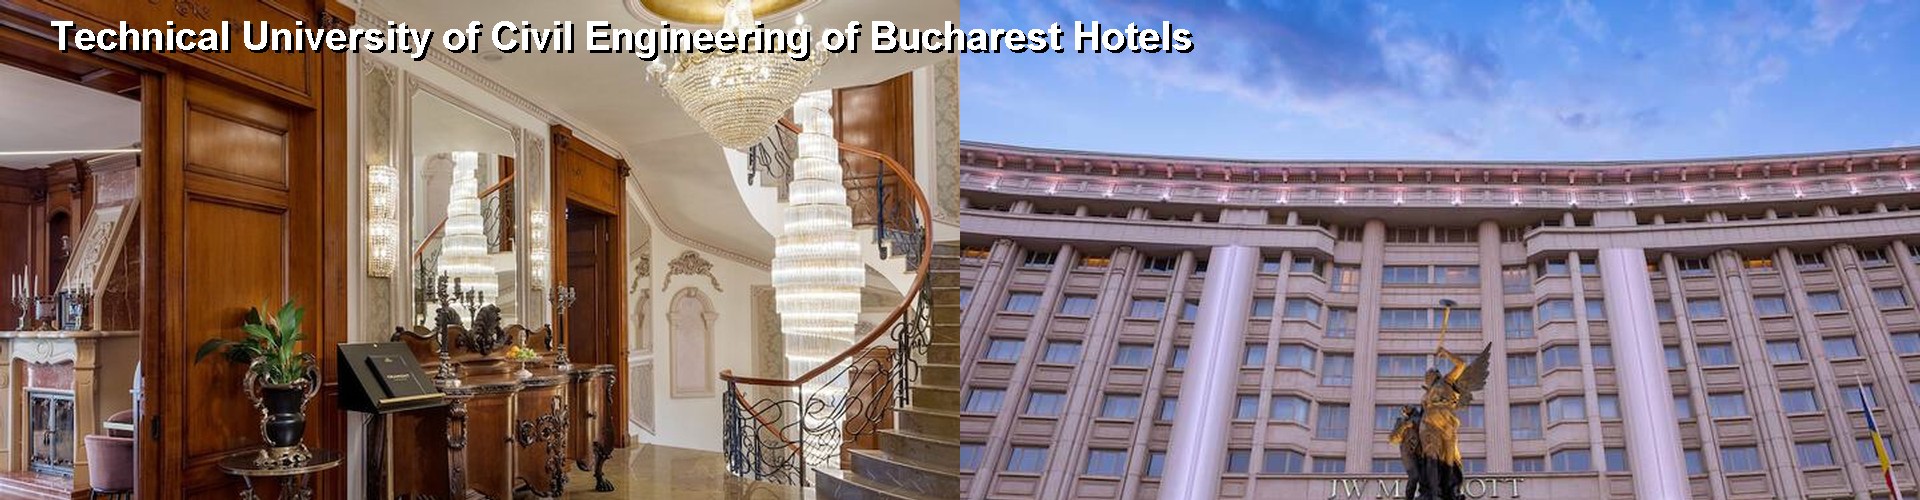 5 Best Hotels near Technical University of Civil Engineering of Bucharest